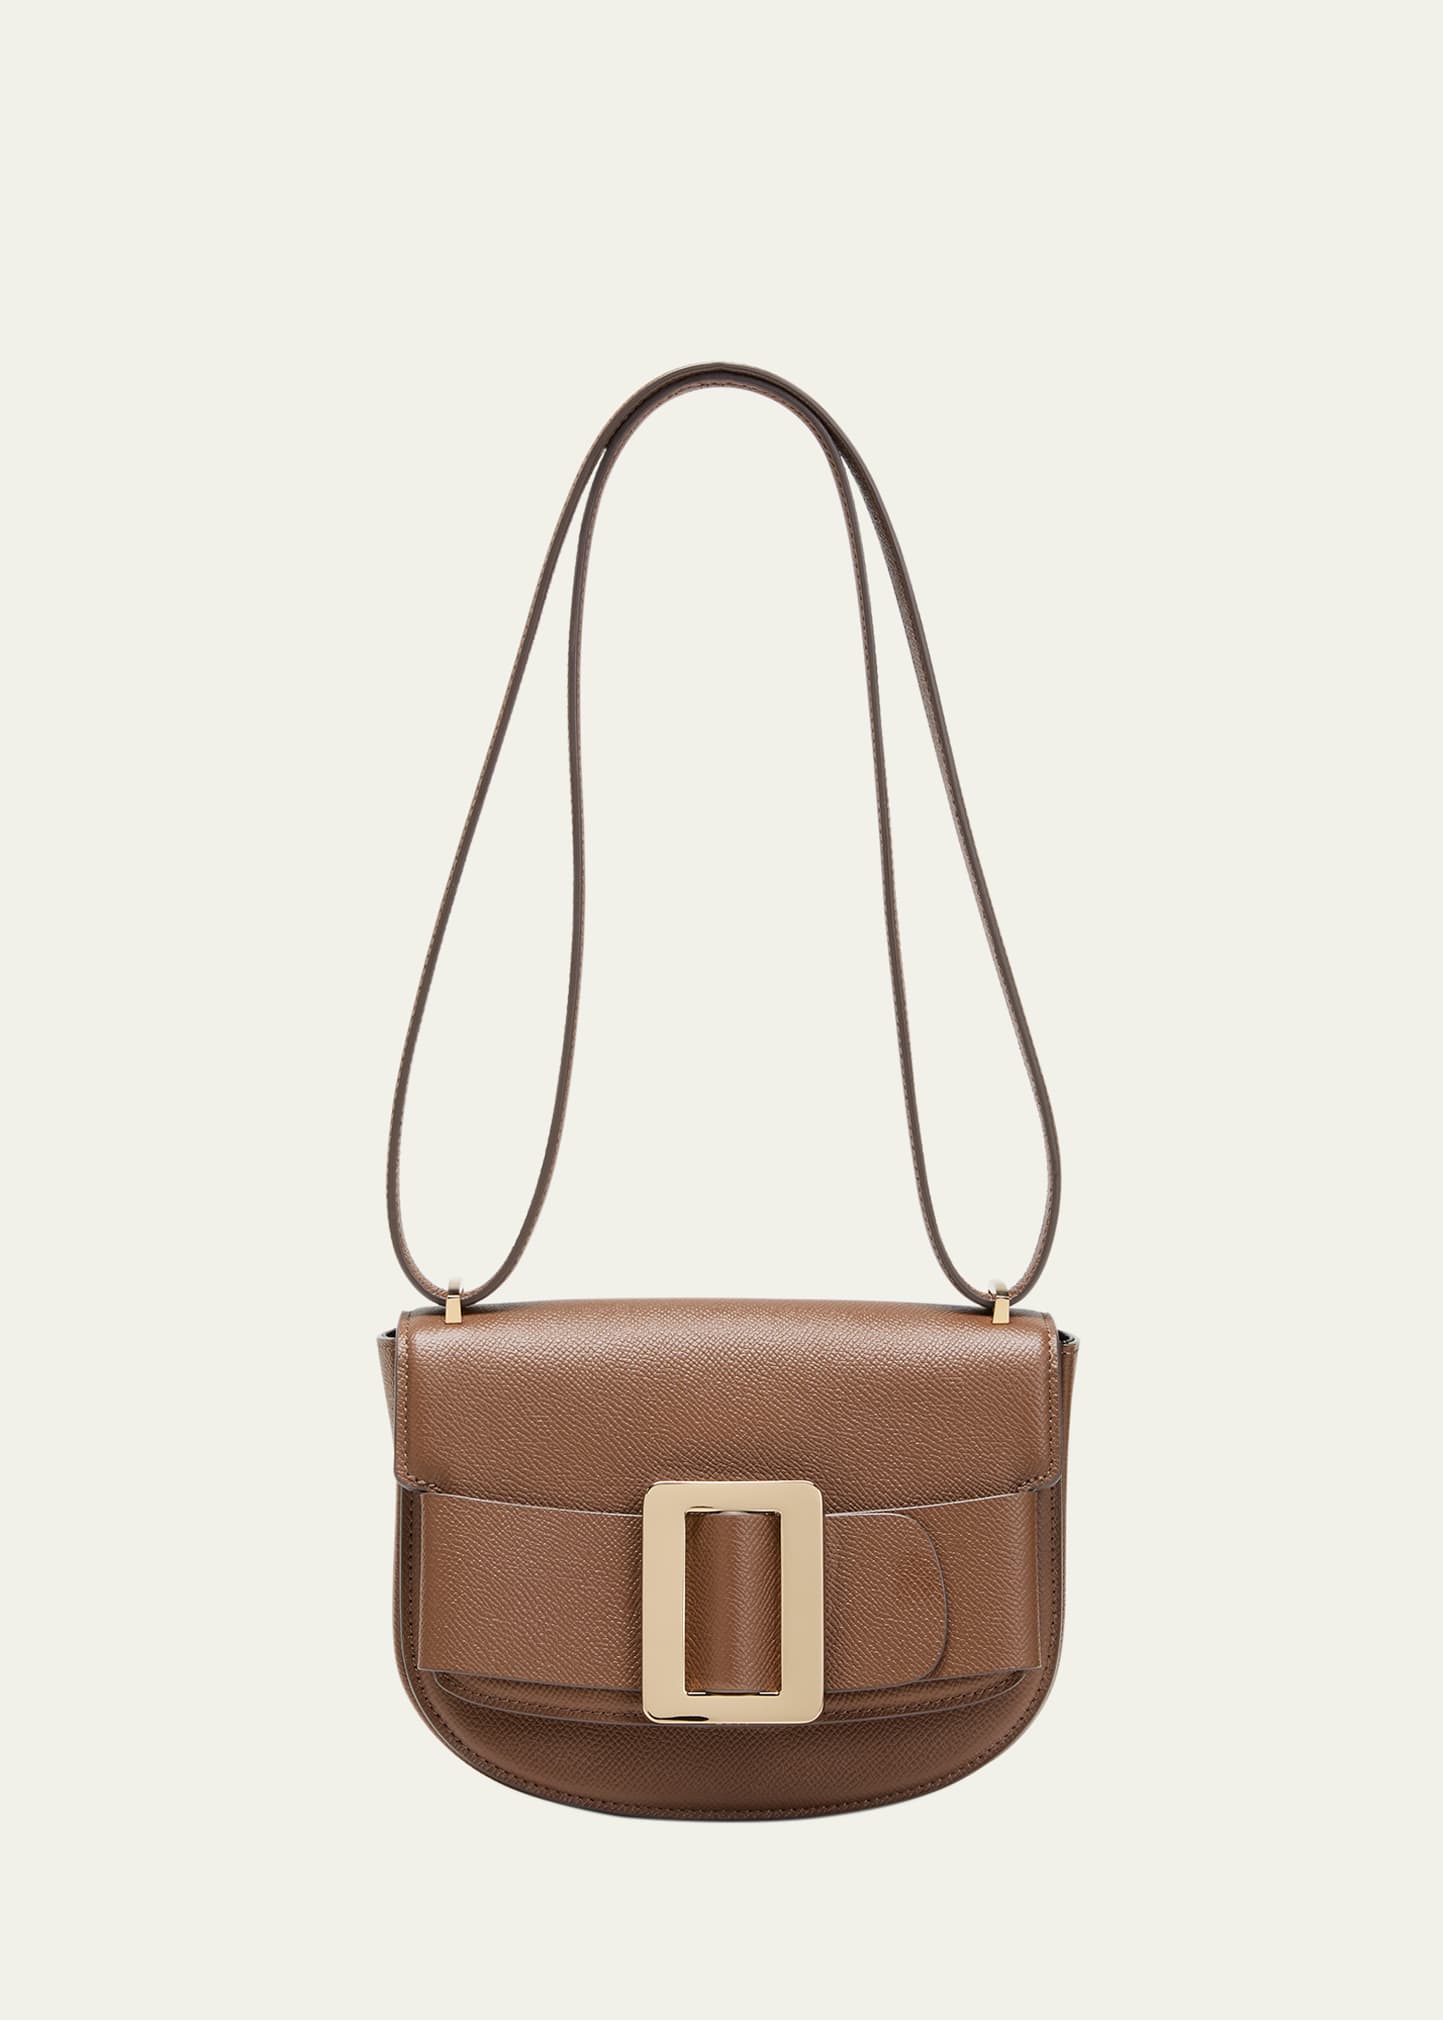 Boyy Buckle Saddle Leather Crossbody Bag, Mocha, Women's, Handbags & Purses Crossbody Bags & Camera Bags